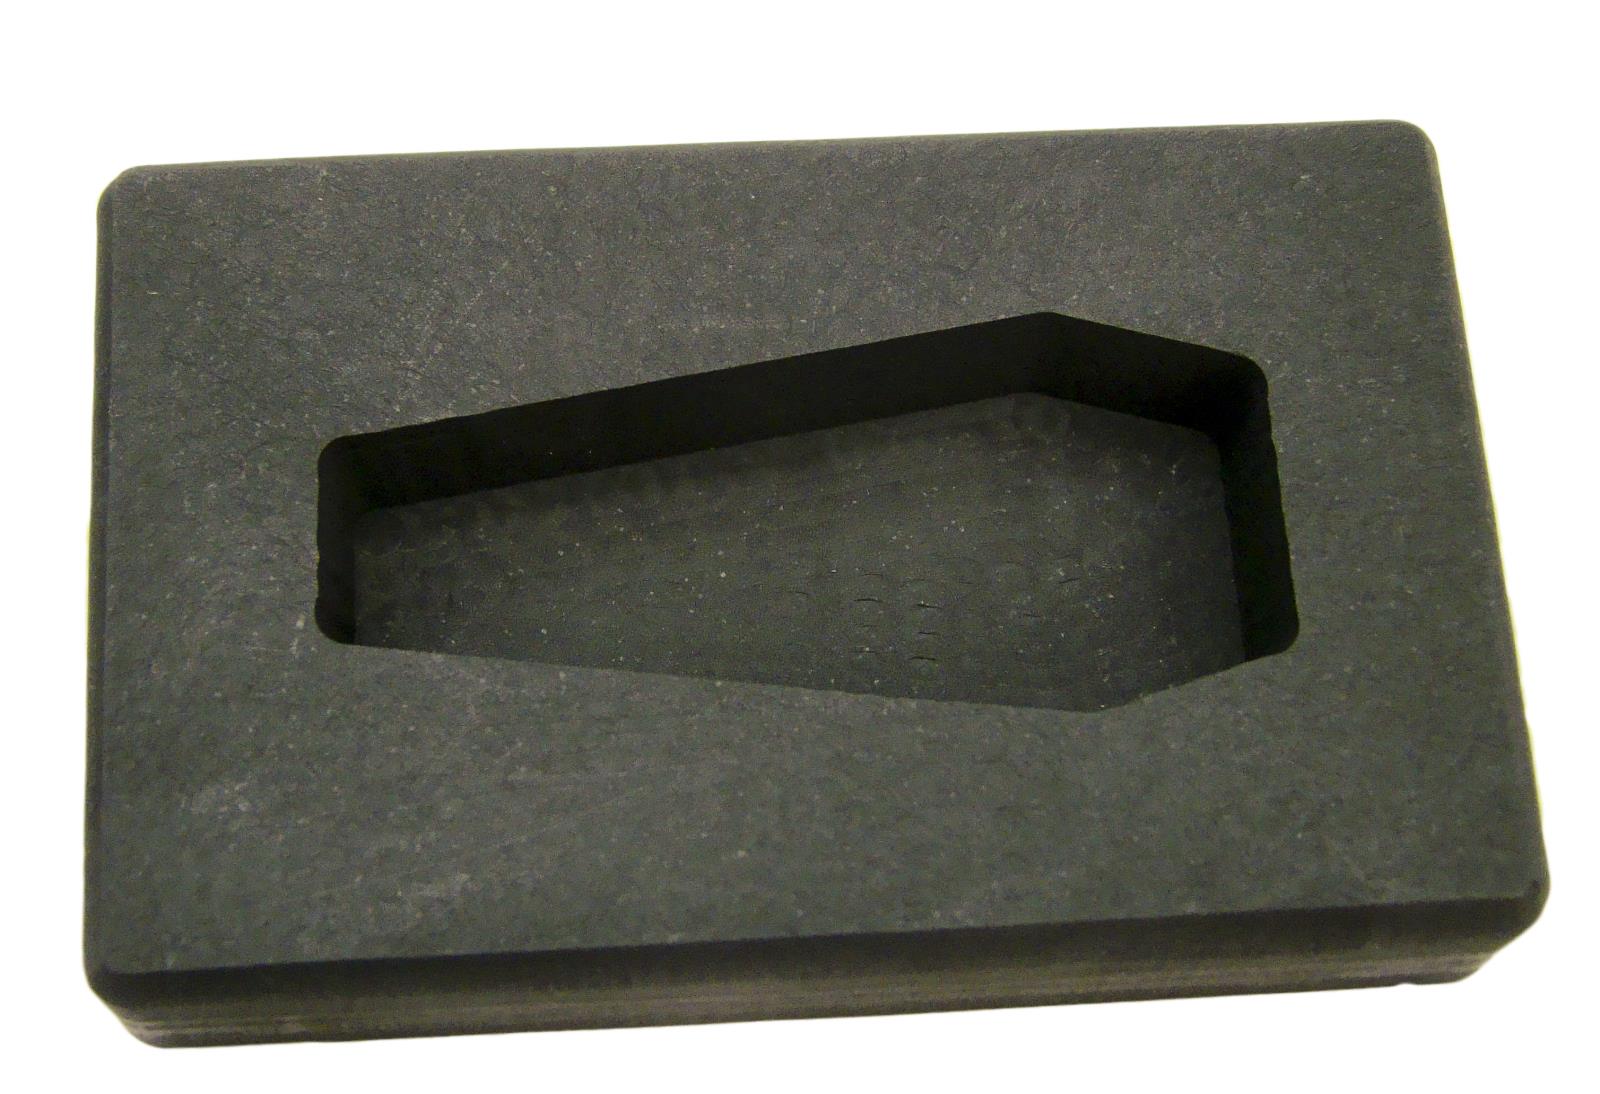 5 oz Coffin Shape Gold High Density Graphite Mold 2.5oz Silver Bar-USA Made